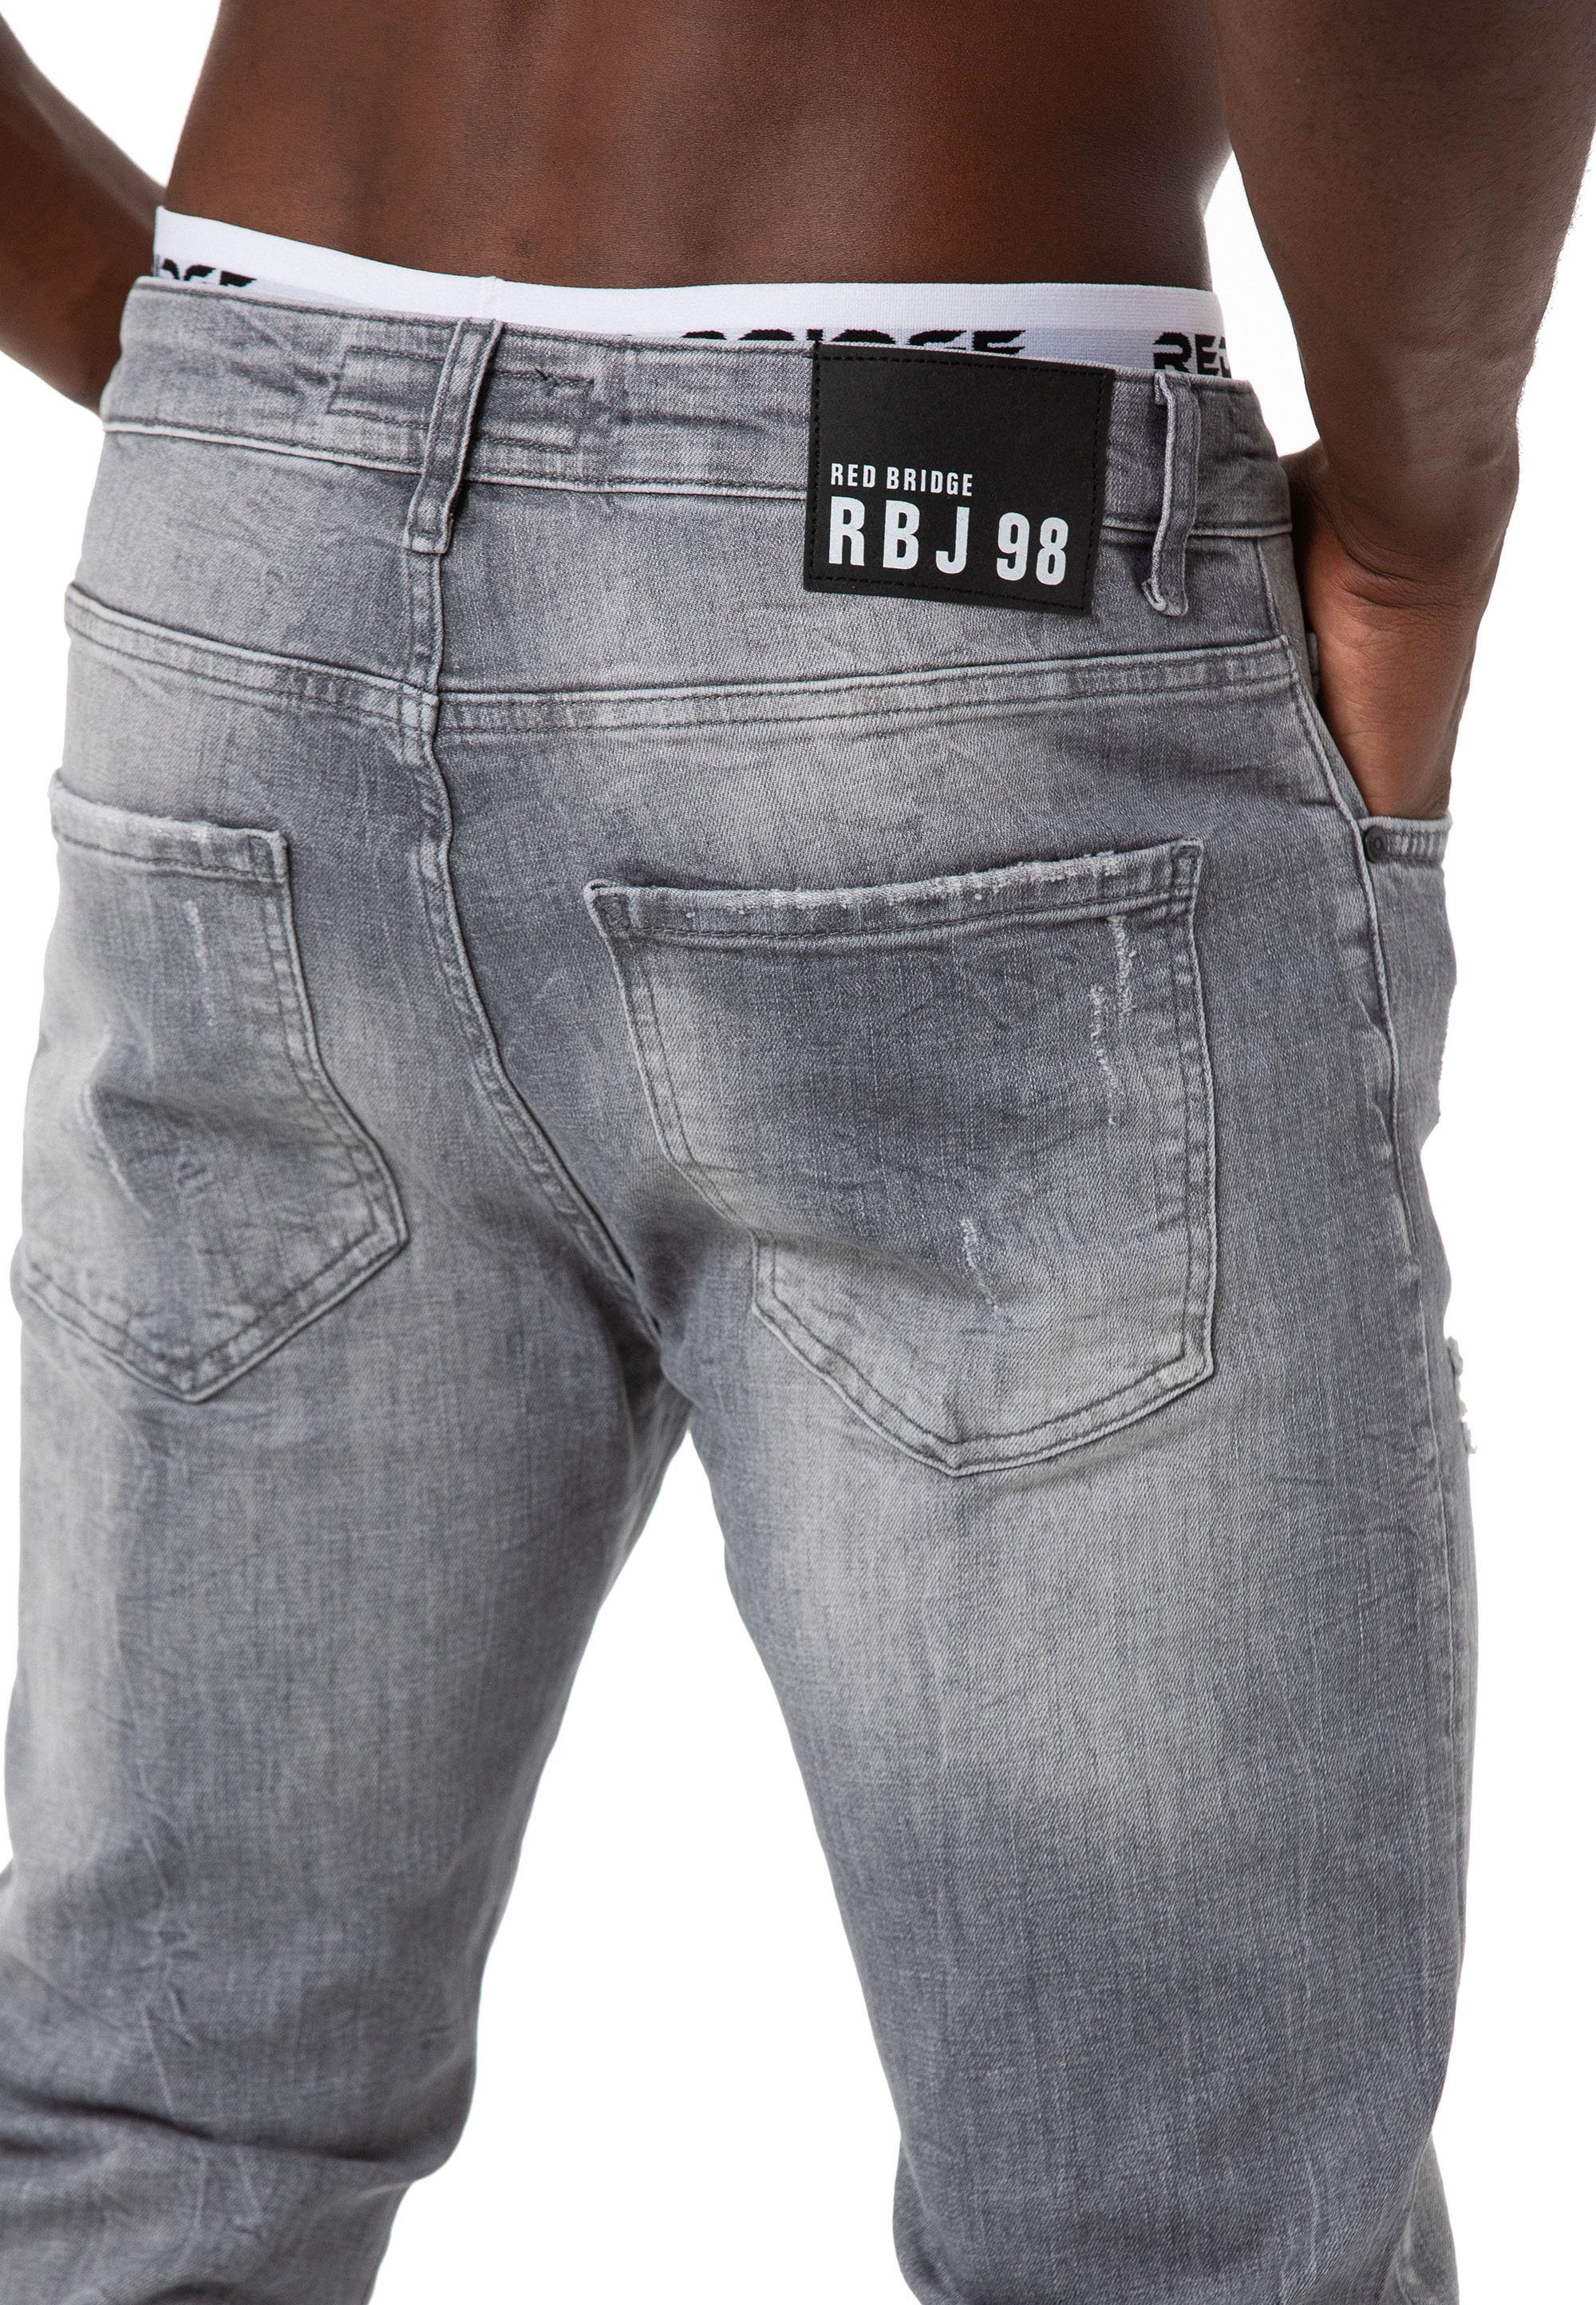 Leg Pants RedBridge Straight Grau Denim Distressed-Look Slim-fit-Jeans Hose